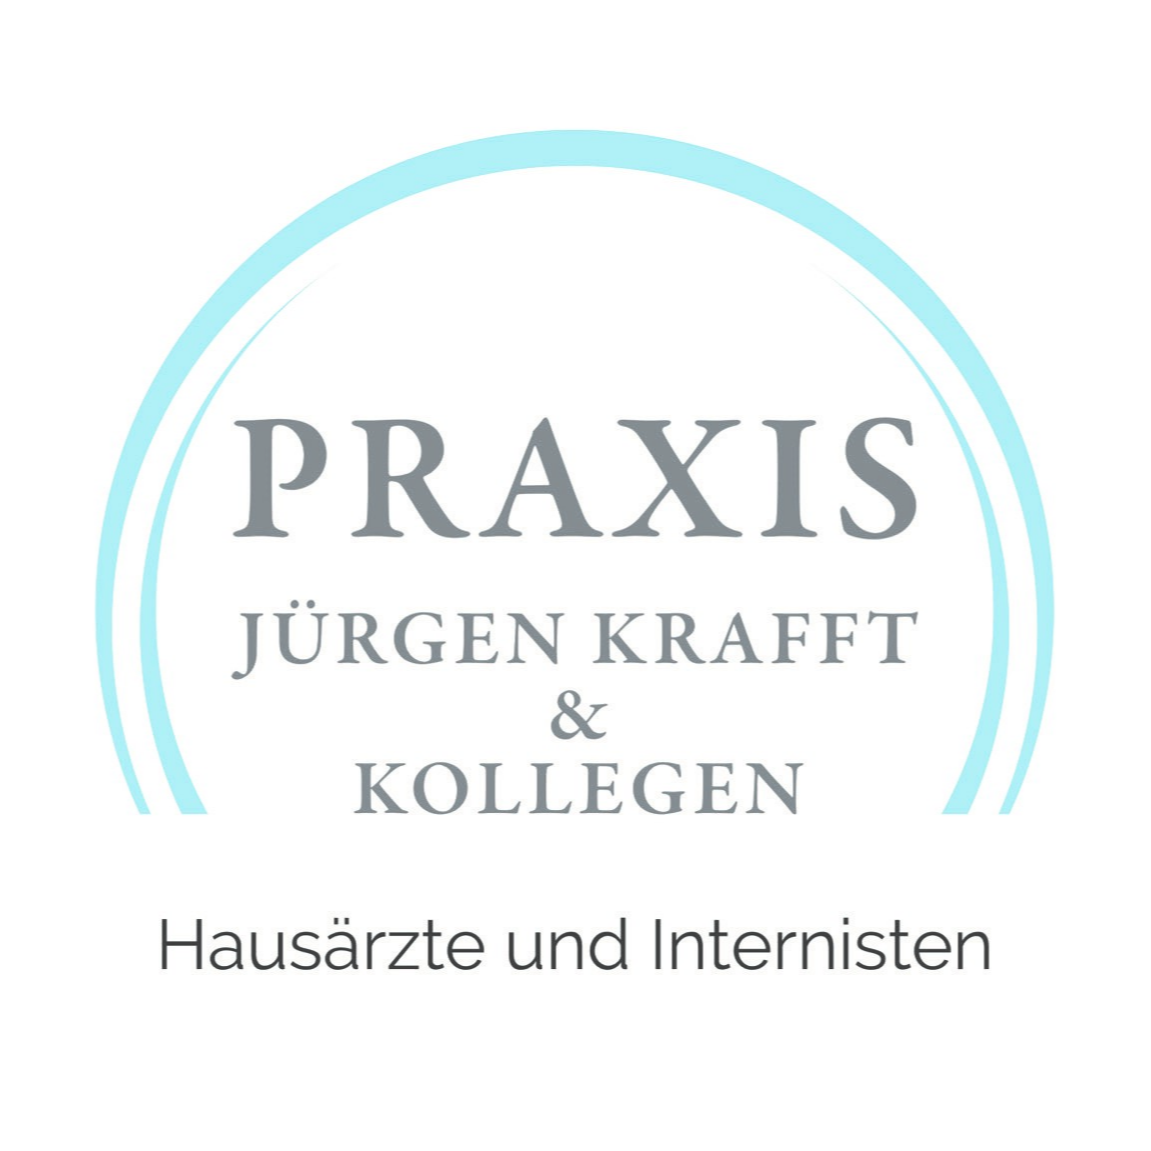 Praxis Jürgen Krafft & Kollegen in Zirndorf - Logo